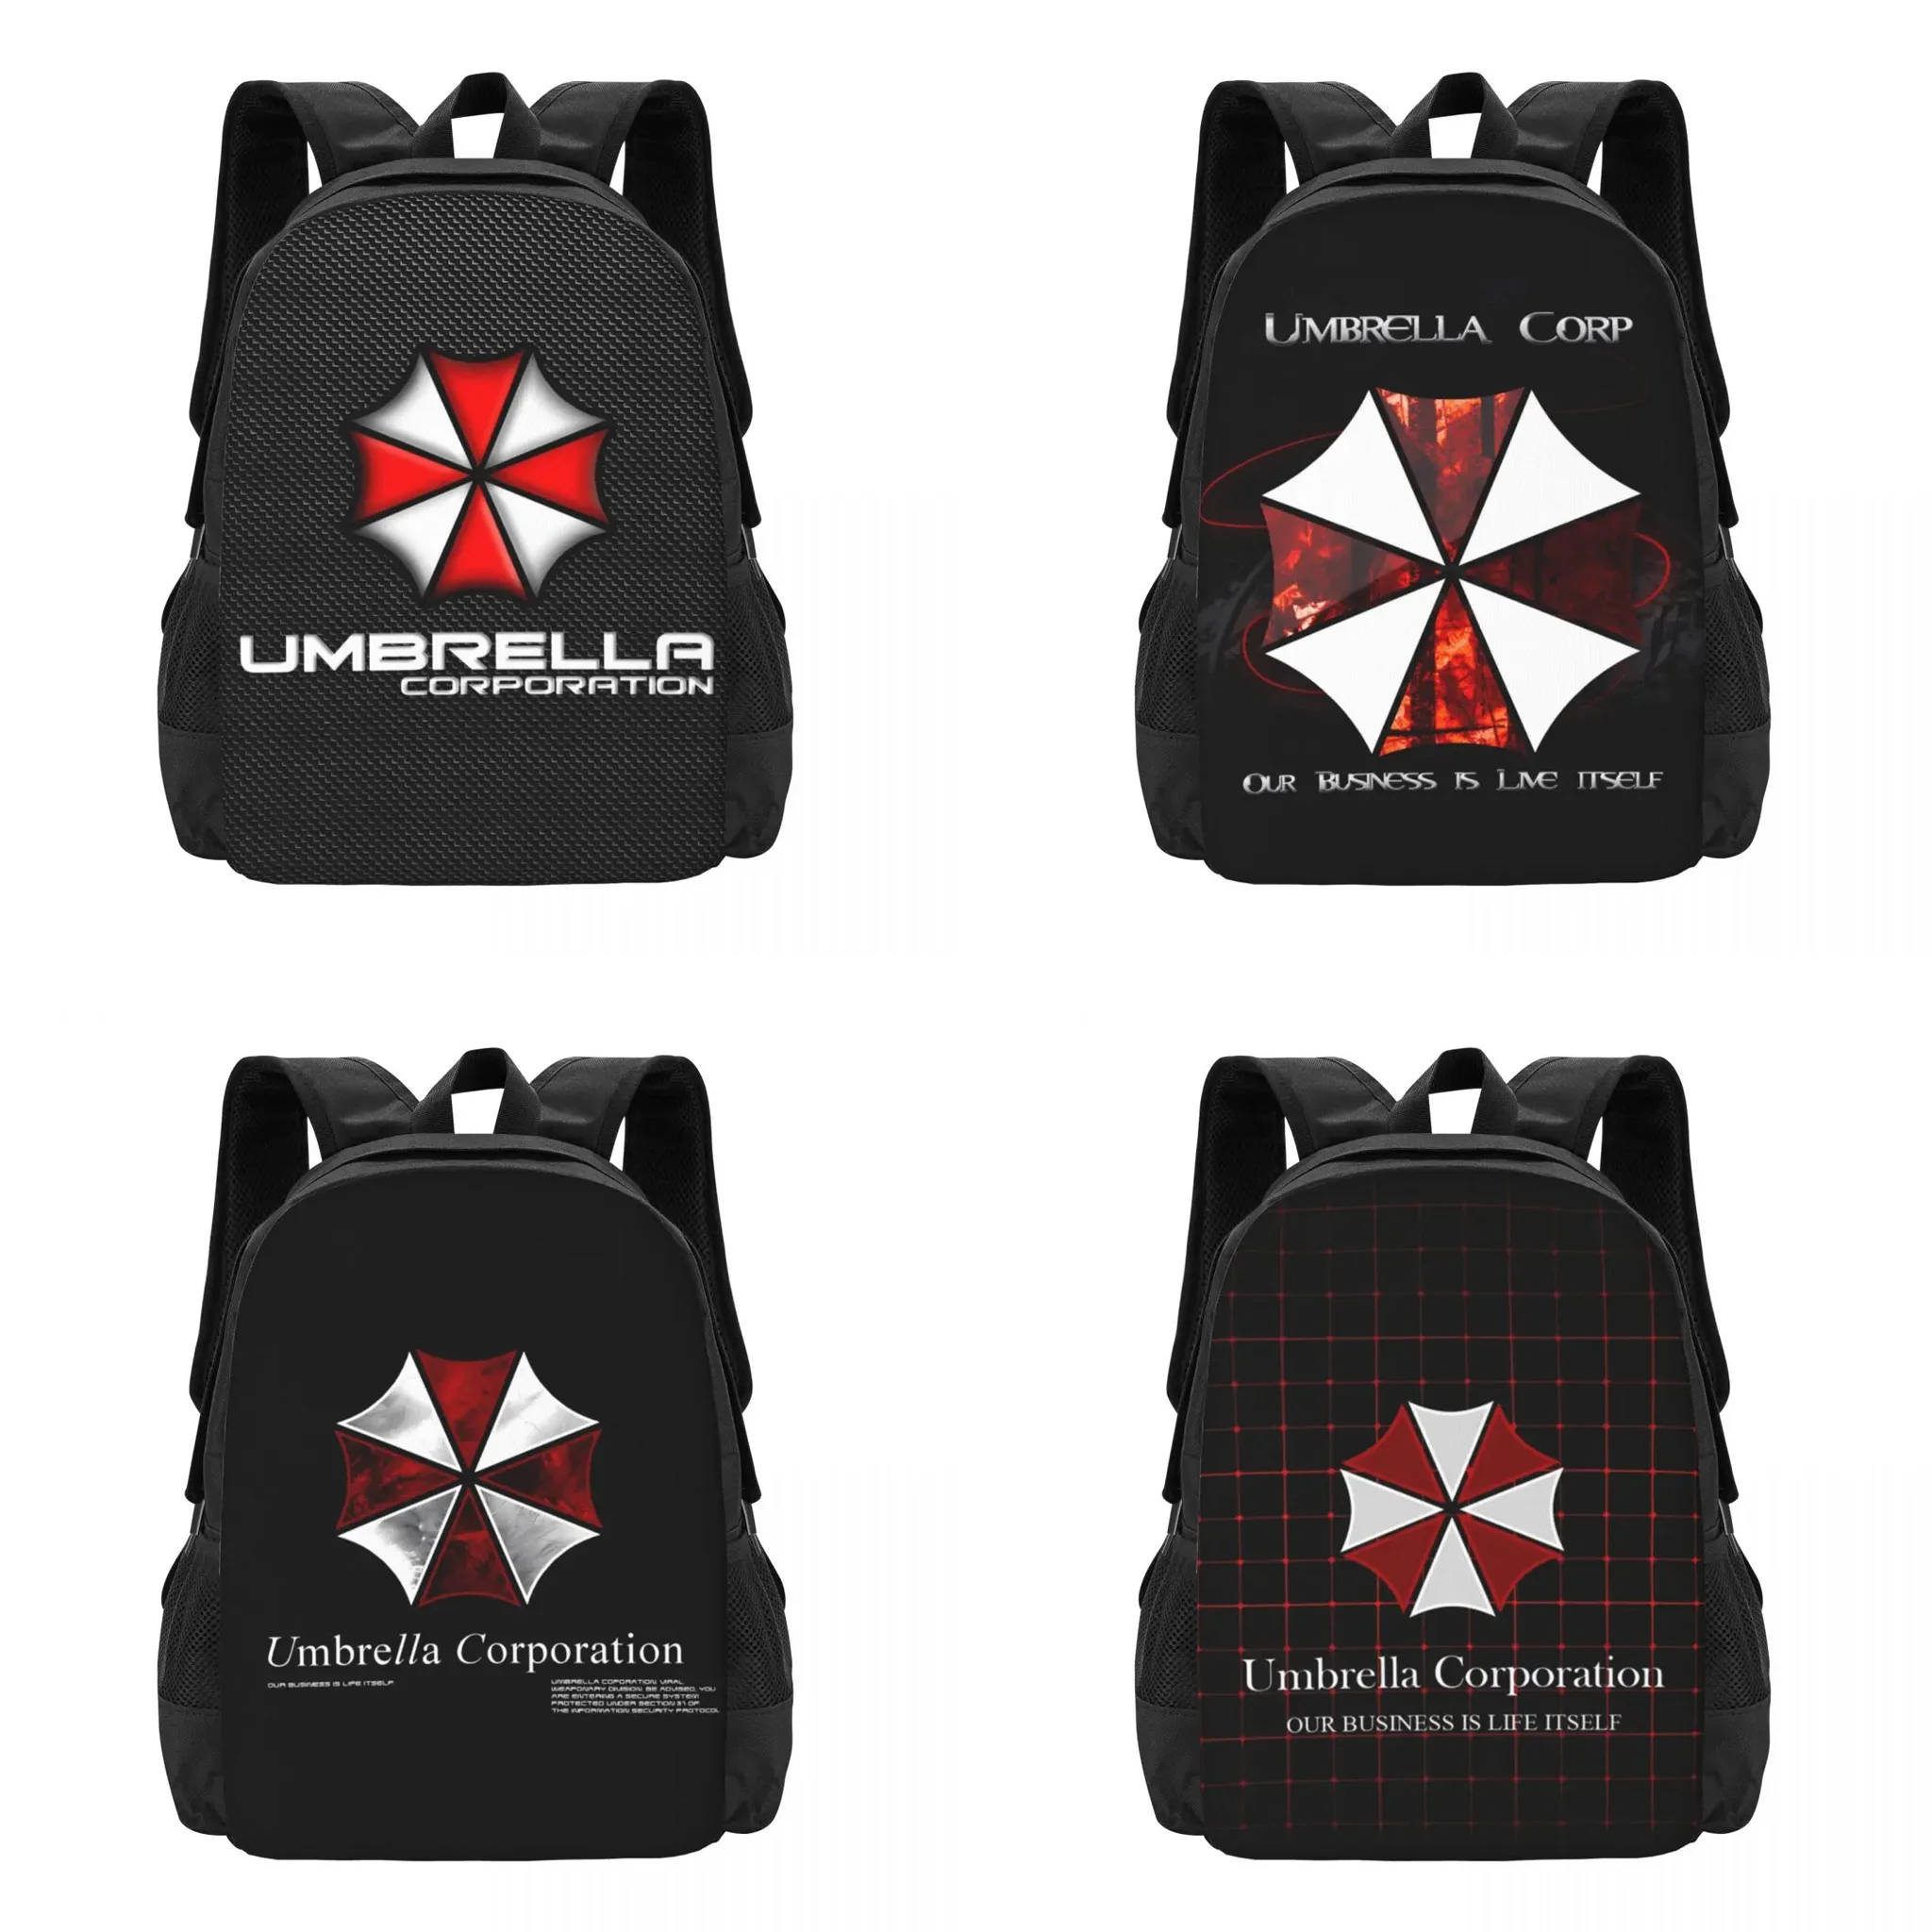 

Corporation Red Umbrella Travel Laptop Backpack, Business College School Computer Bag Gift for Men & Women